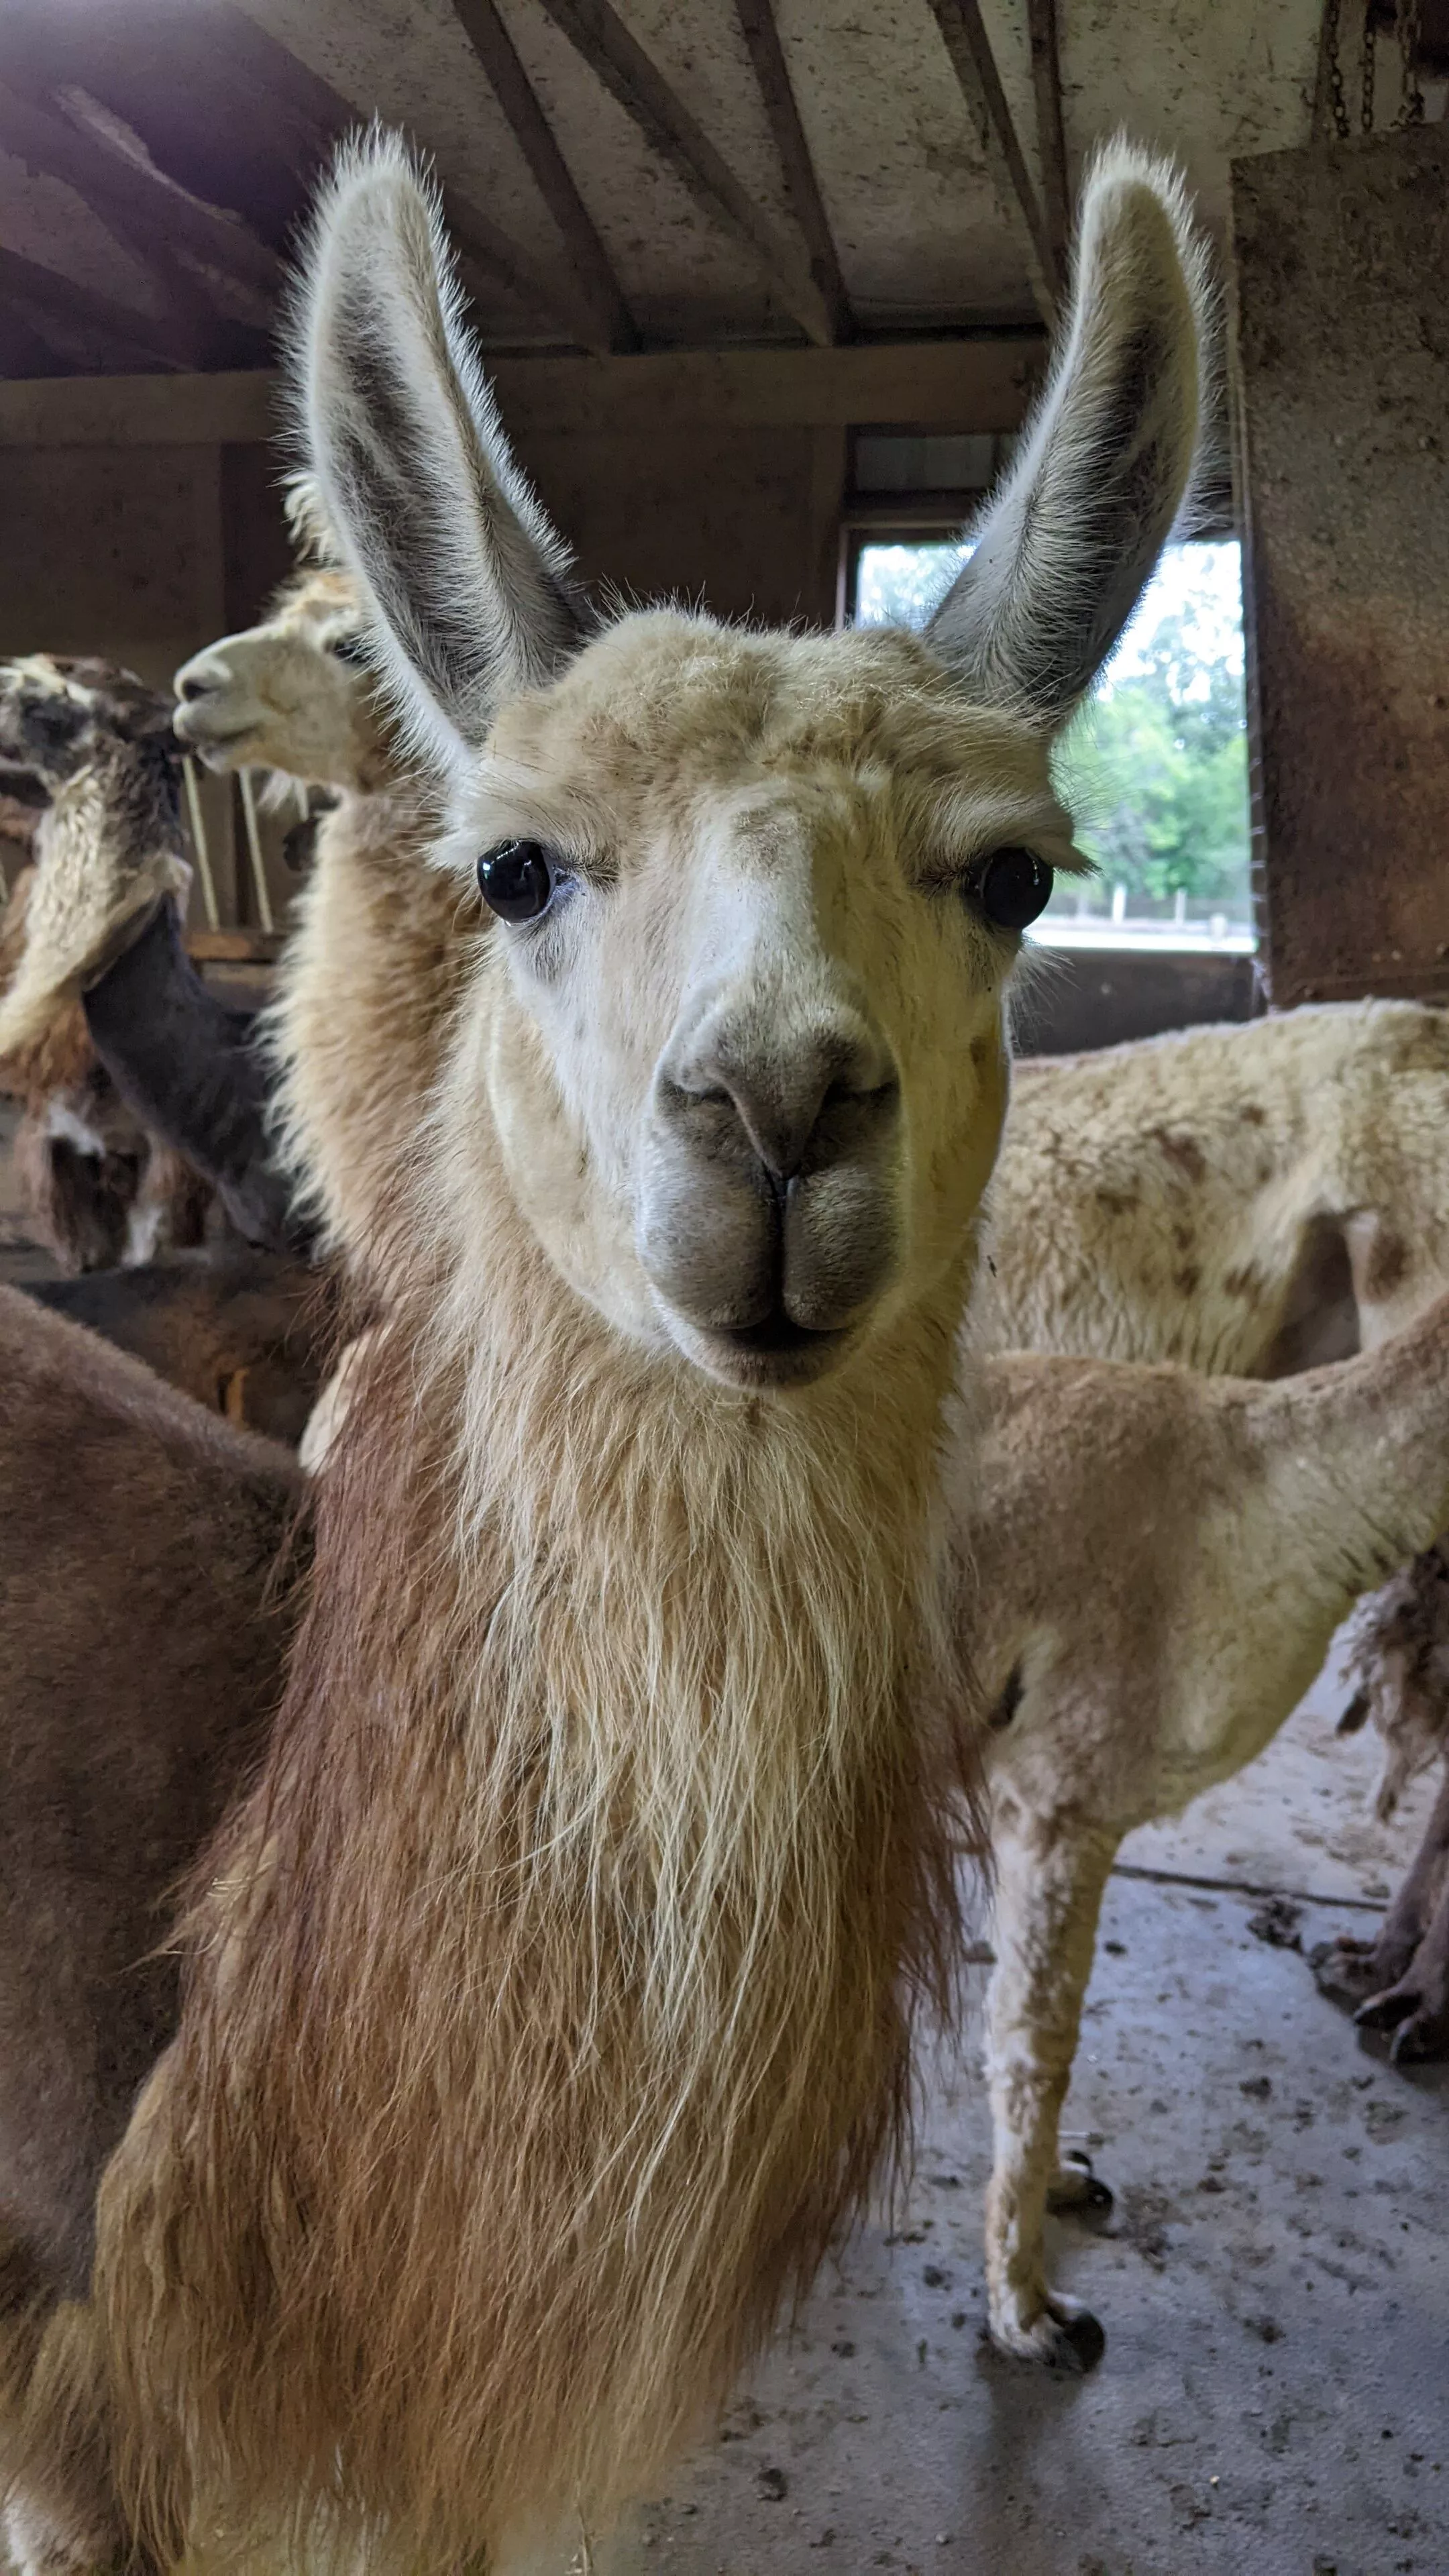 An image of a llama named Lottie inside a barn